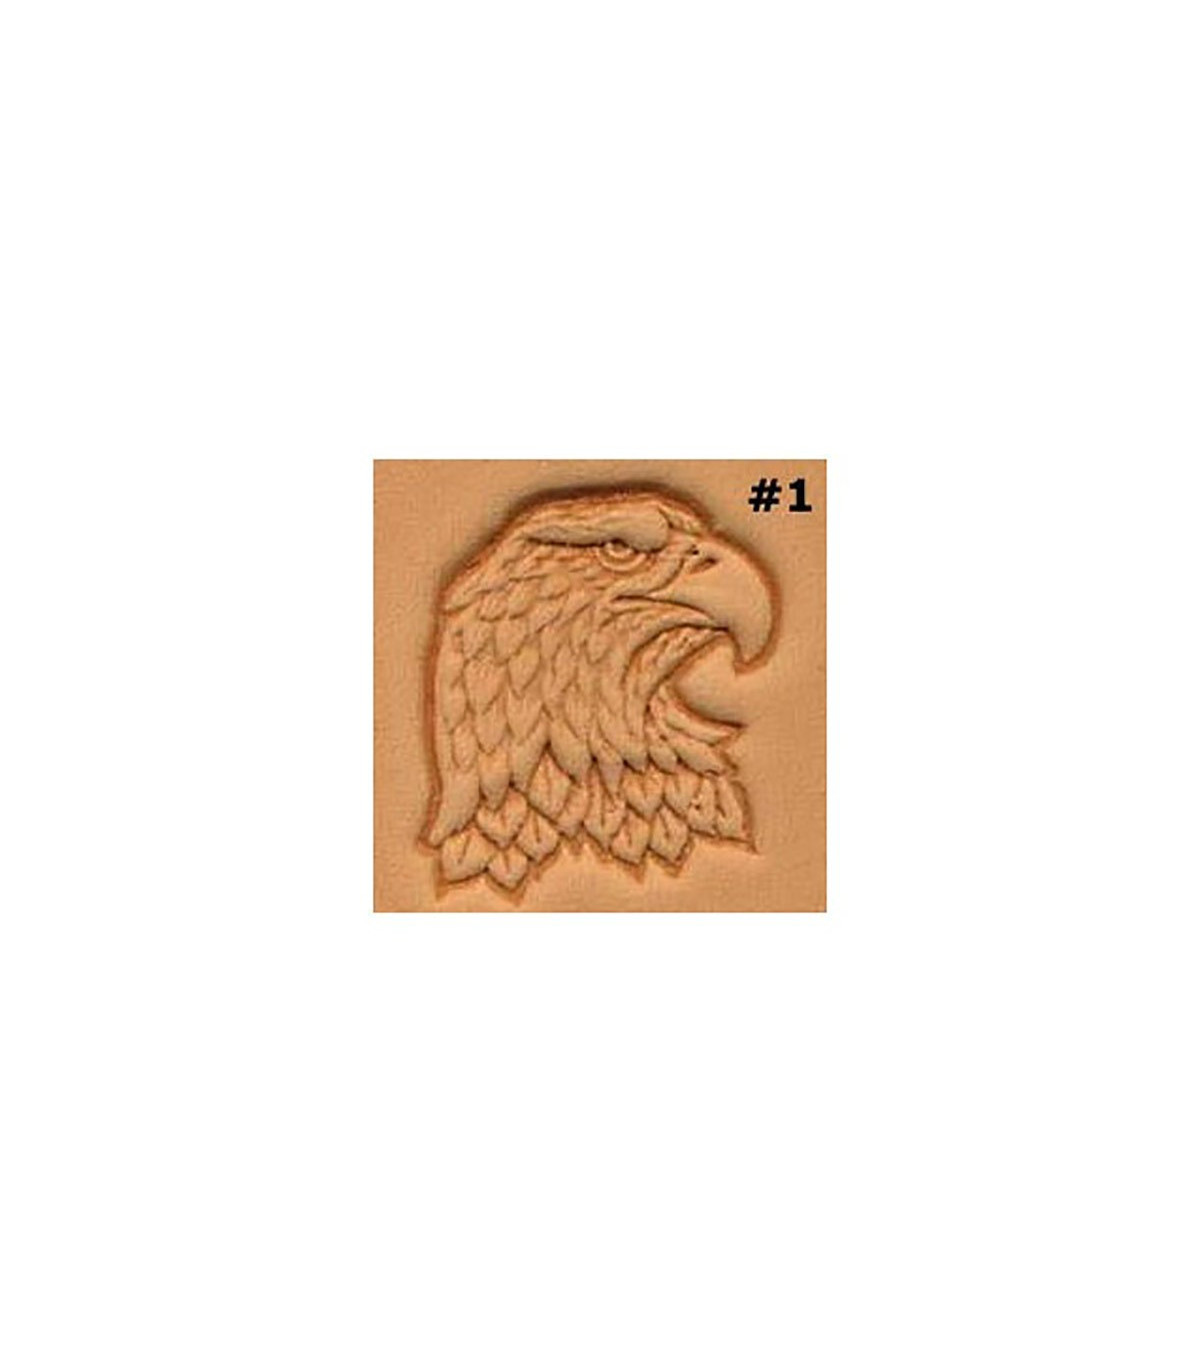 Eagle stamps